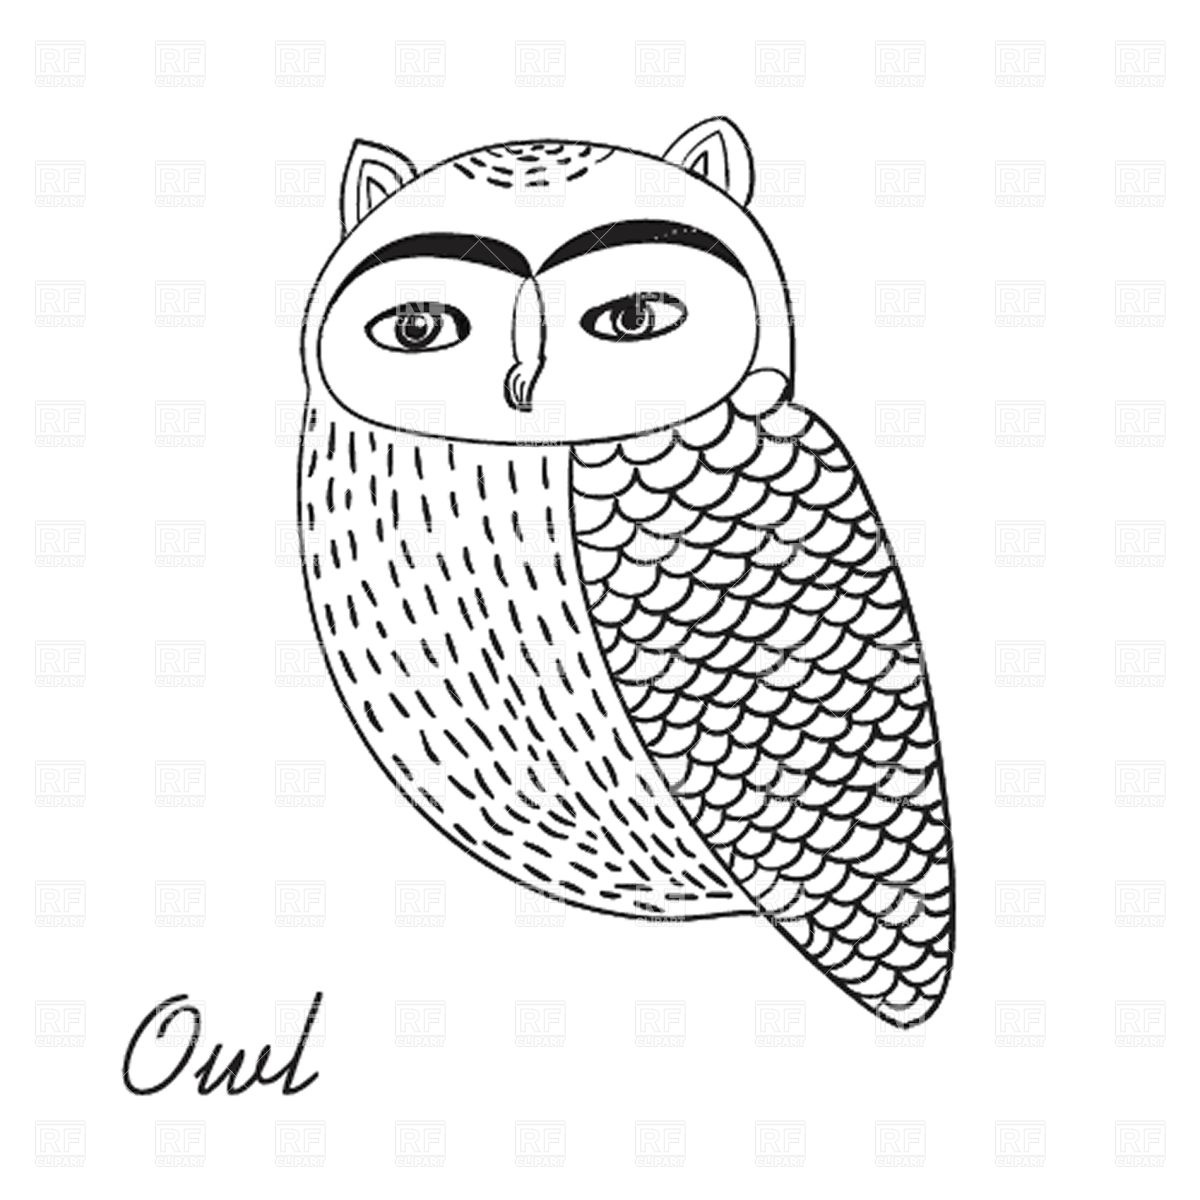 Cute Hand Drawn Owl Bird Illustration 21151 Download Royalty Free